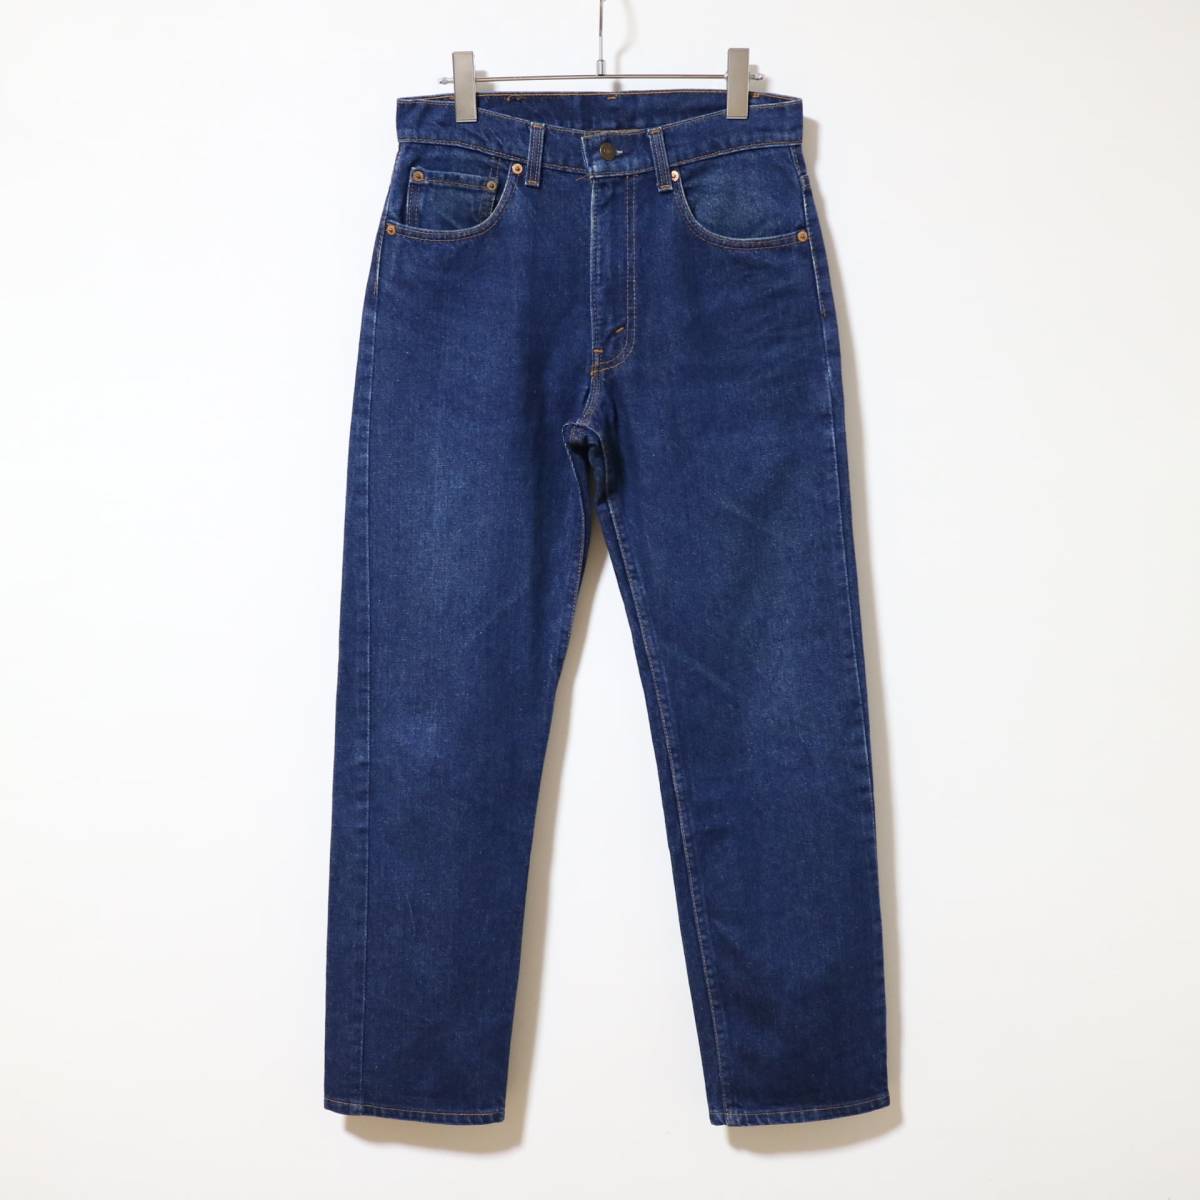 Levi's 505 / Late 80's Vintage Denim Pants / Made in USA /リーバイス/505/ヴィンテージデニム/テーパードデニム/80年代/アメリカ製